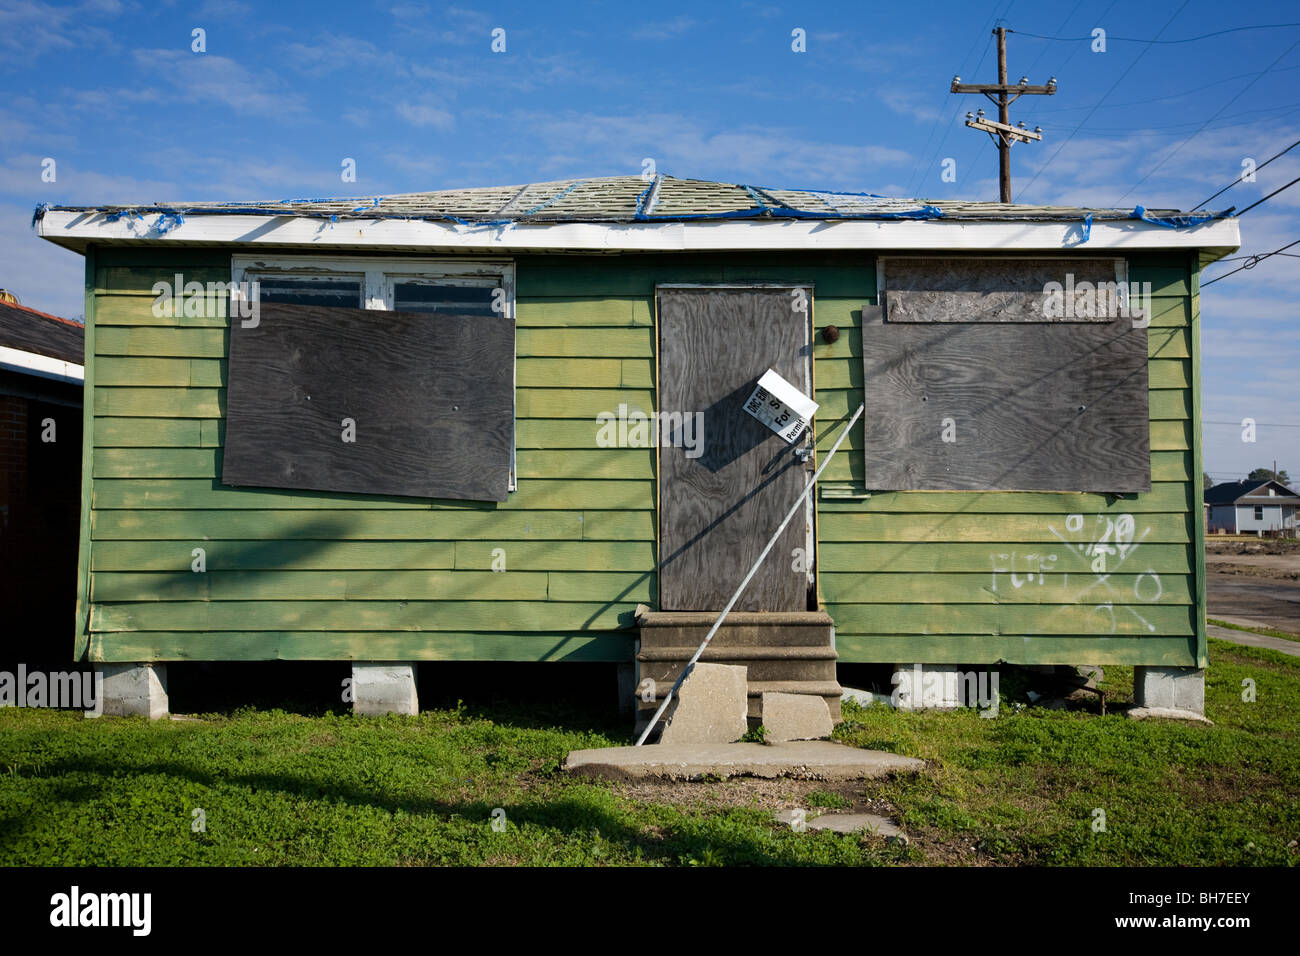 Senken Sie Hause durch Hurrikan Katrina beschädigt, neunte Station, New Orleans, Louisiana Stockfoto